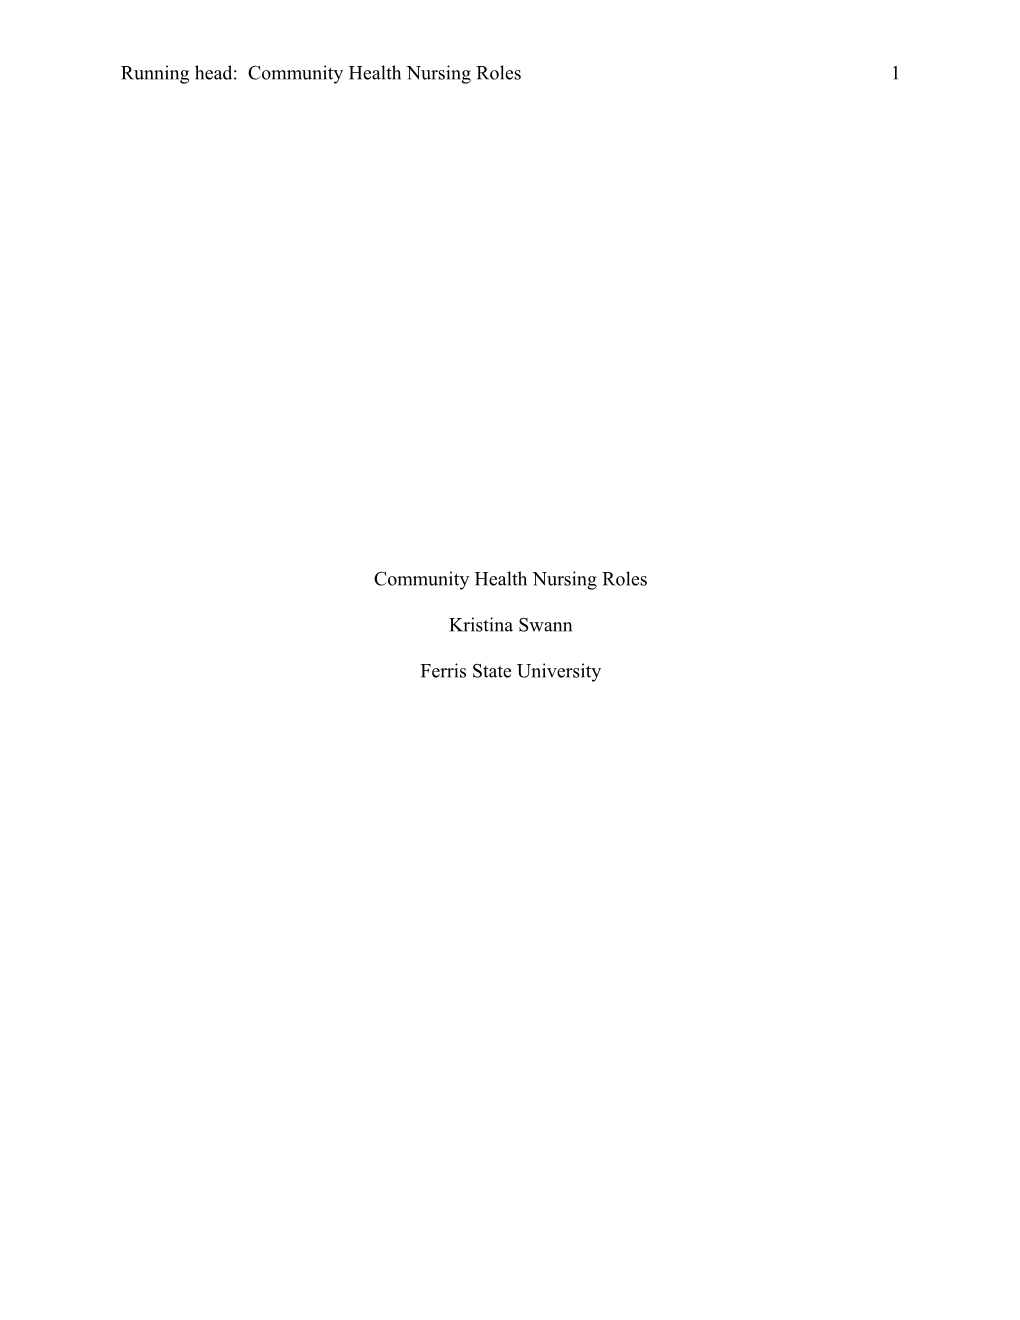 Community Health Nursing Roles 10